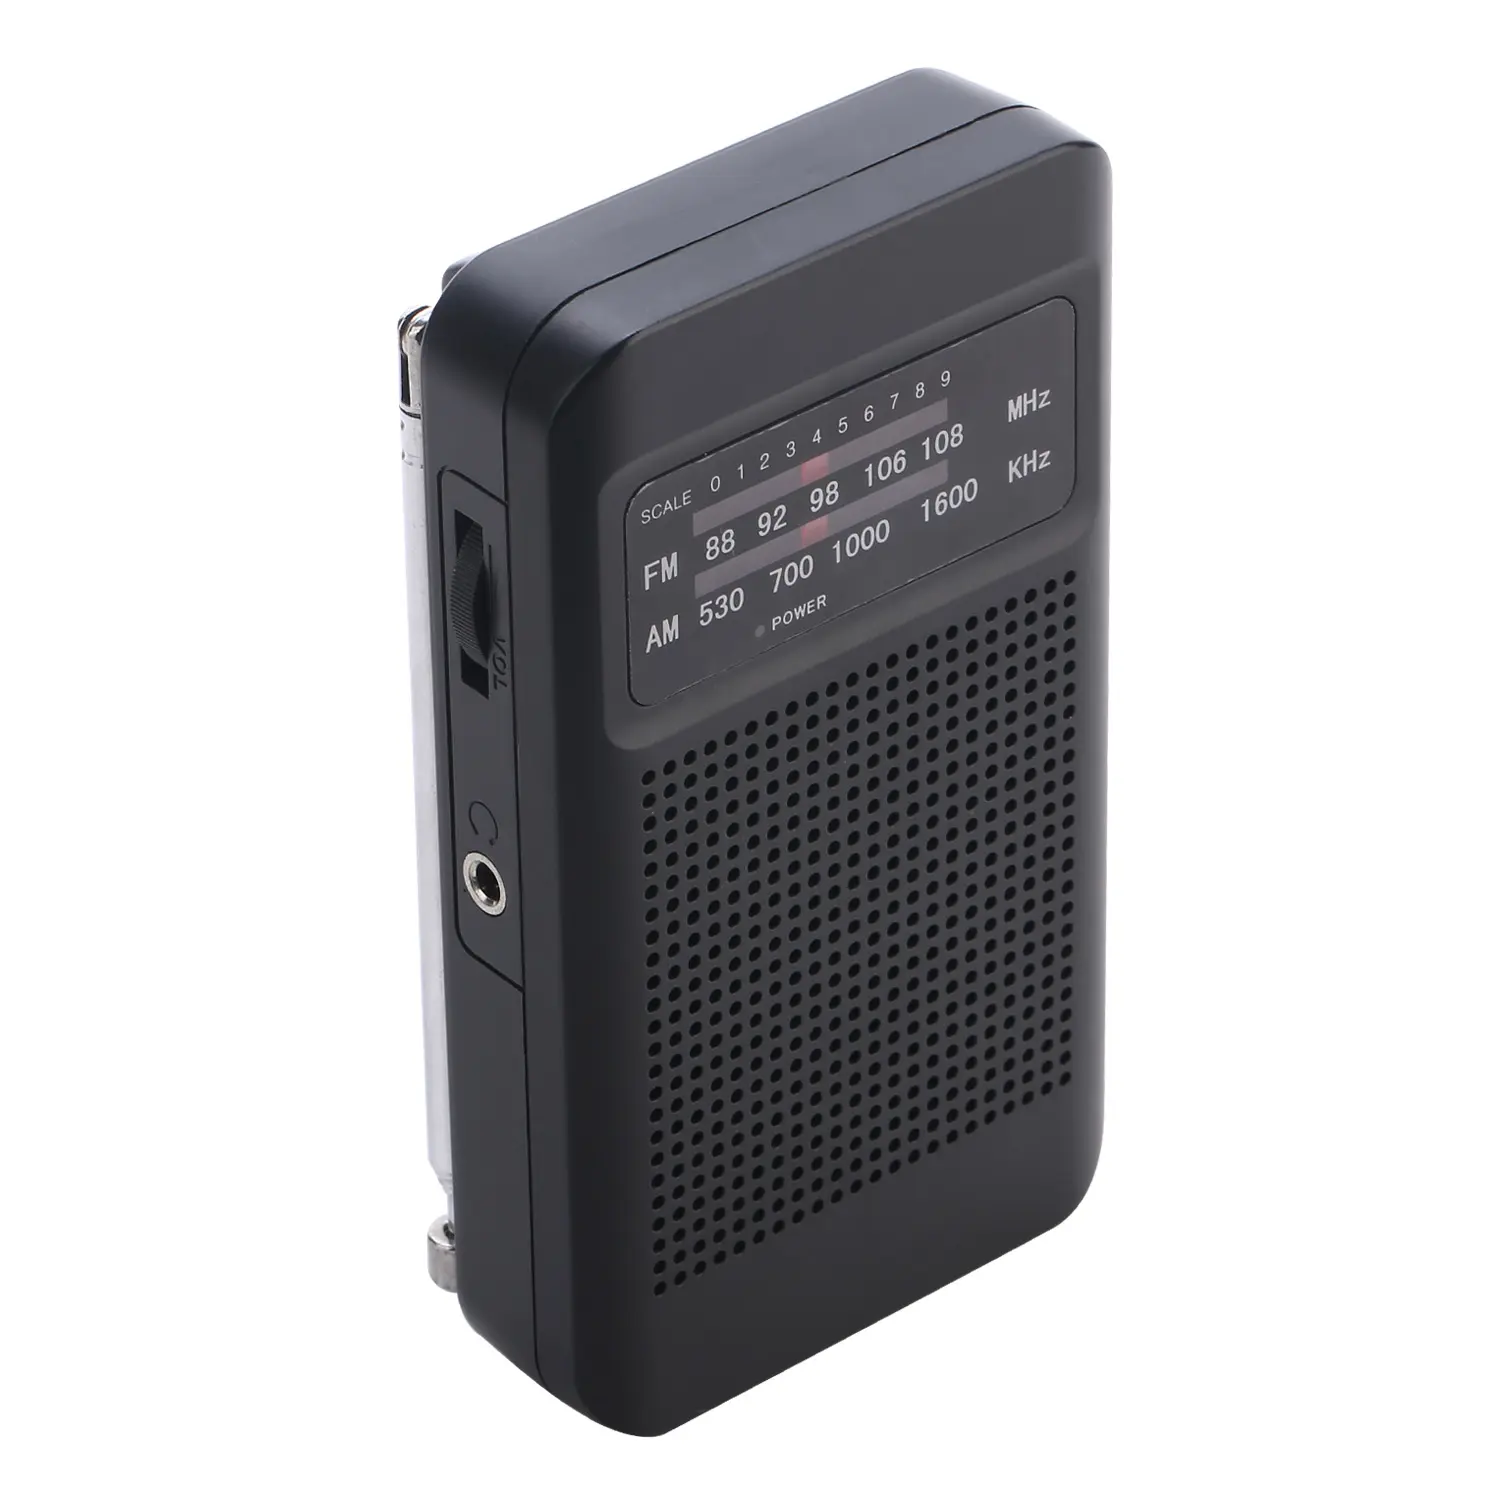 Newest design high quality Factory price FM AM 2 band radio fm mini pocket radio